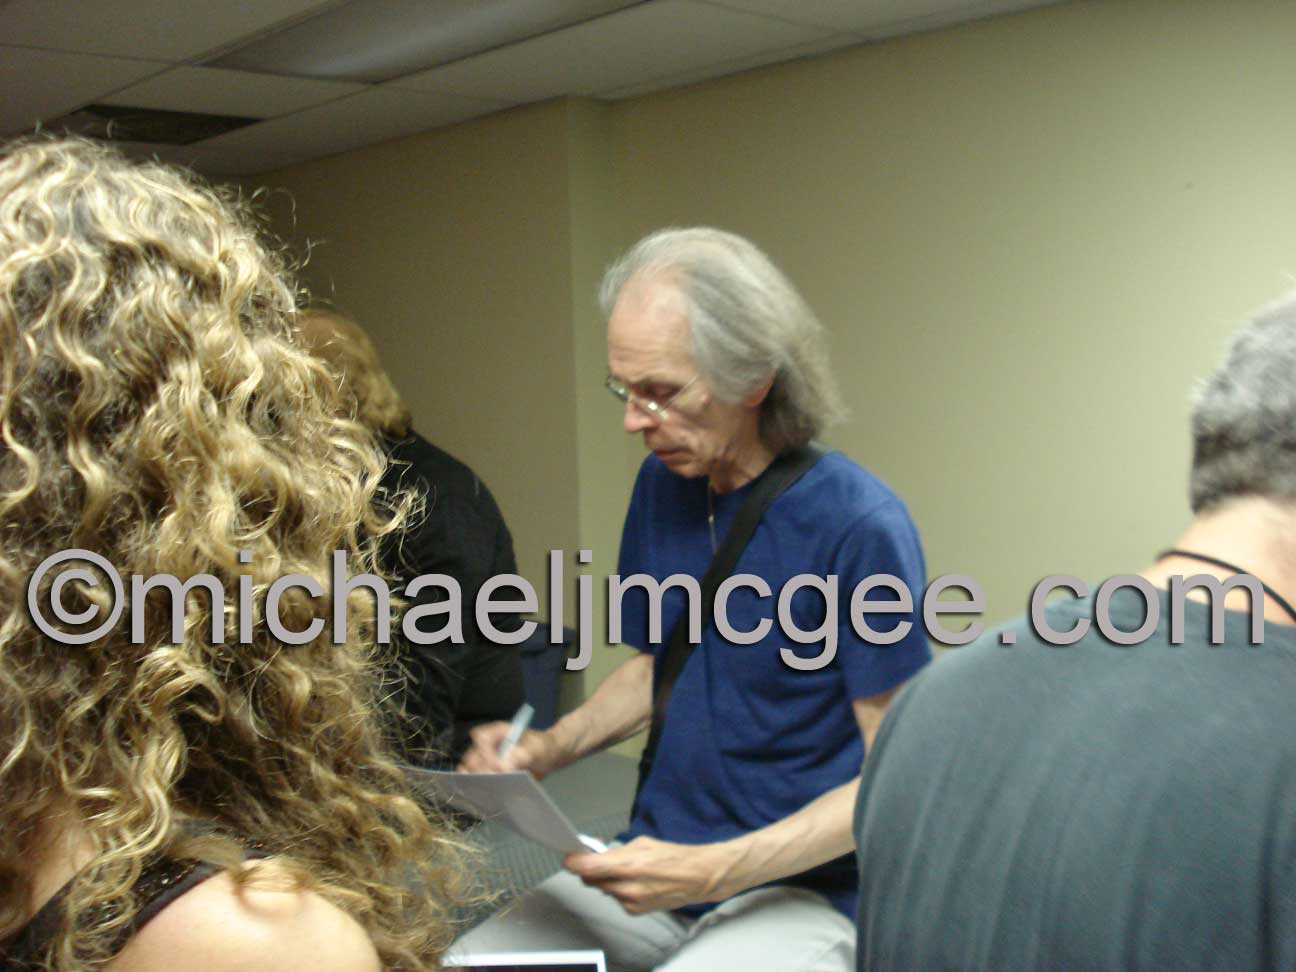 Steve Howe / michaeljmcgee.com